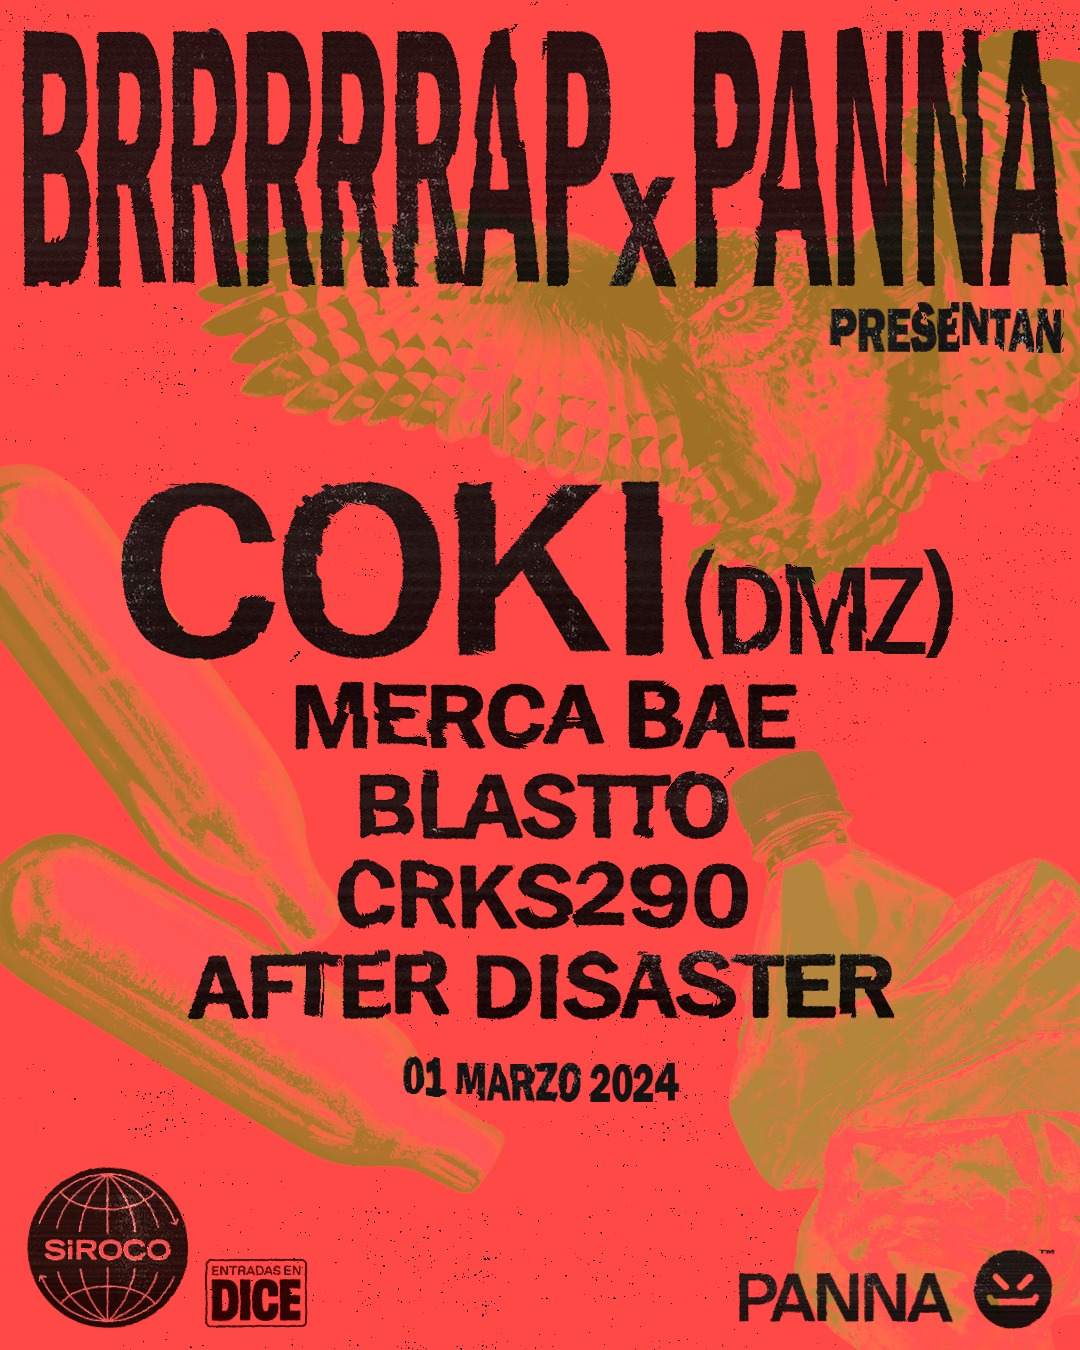 BRRRRRAP with PANNA presenta: Coki (Dmz) - Página frontal